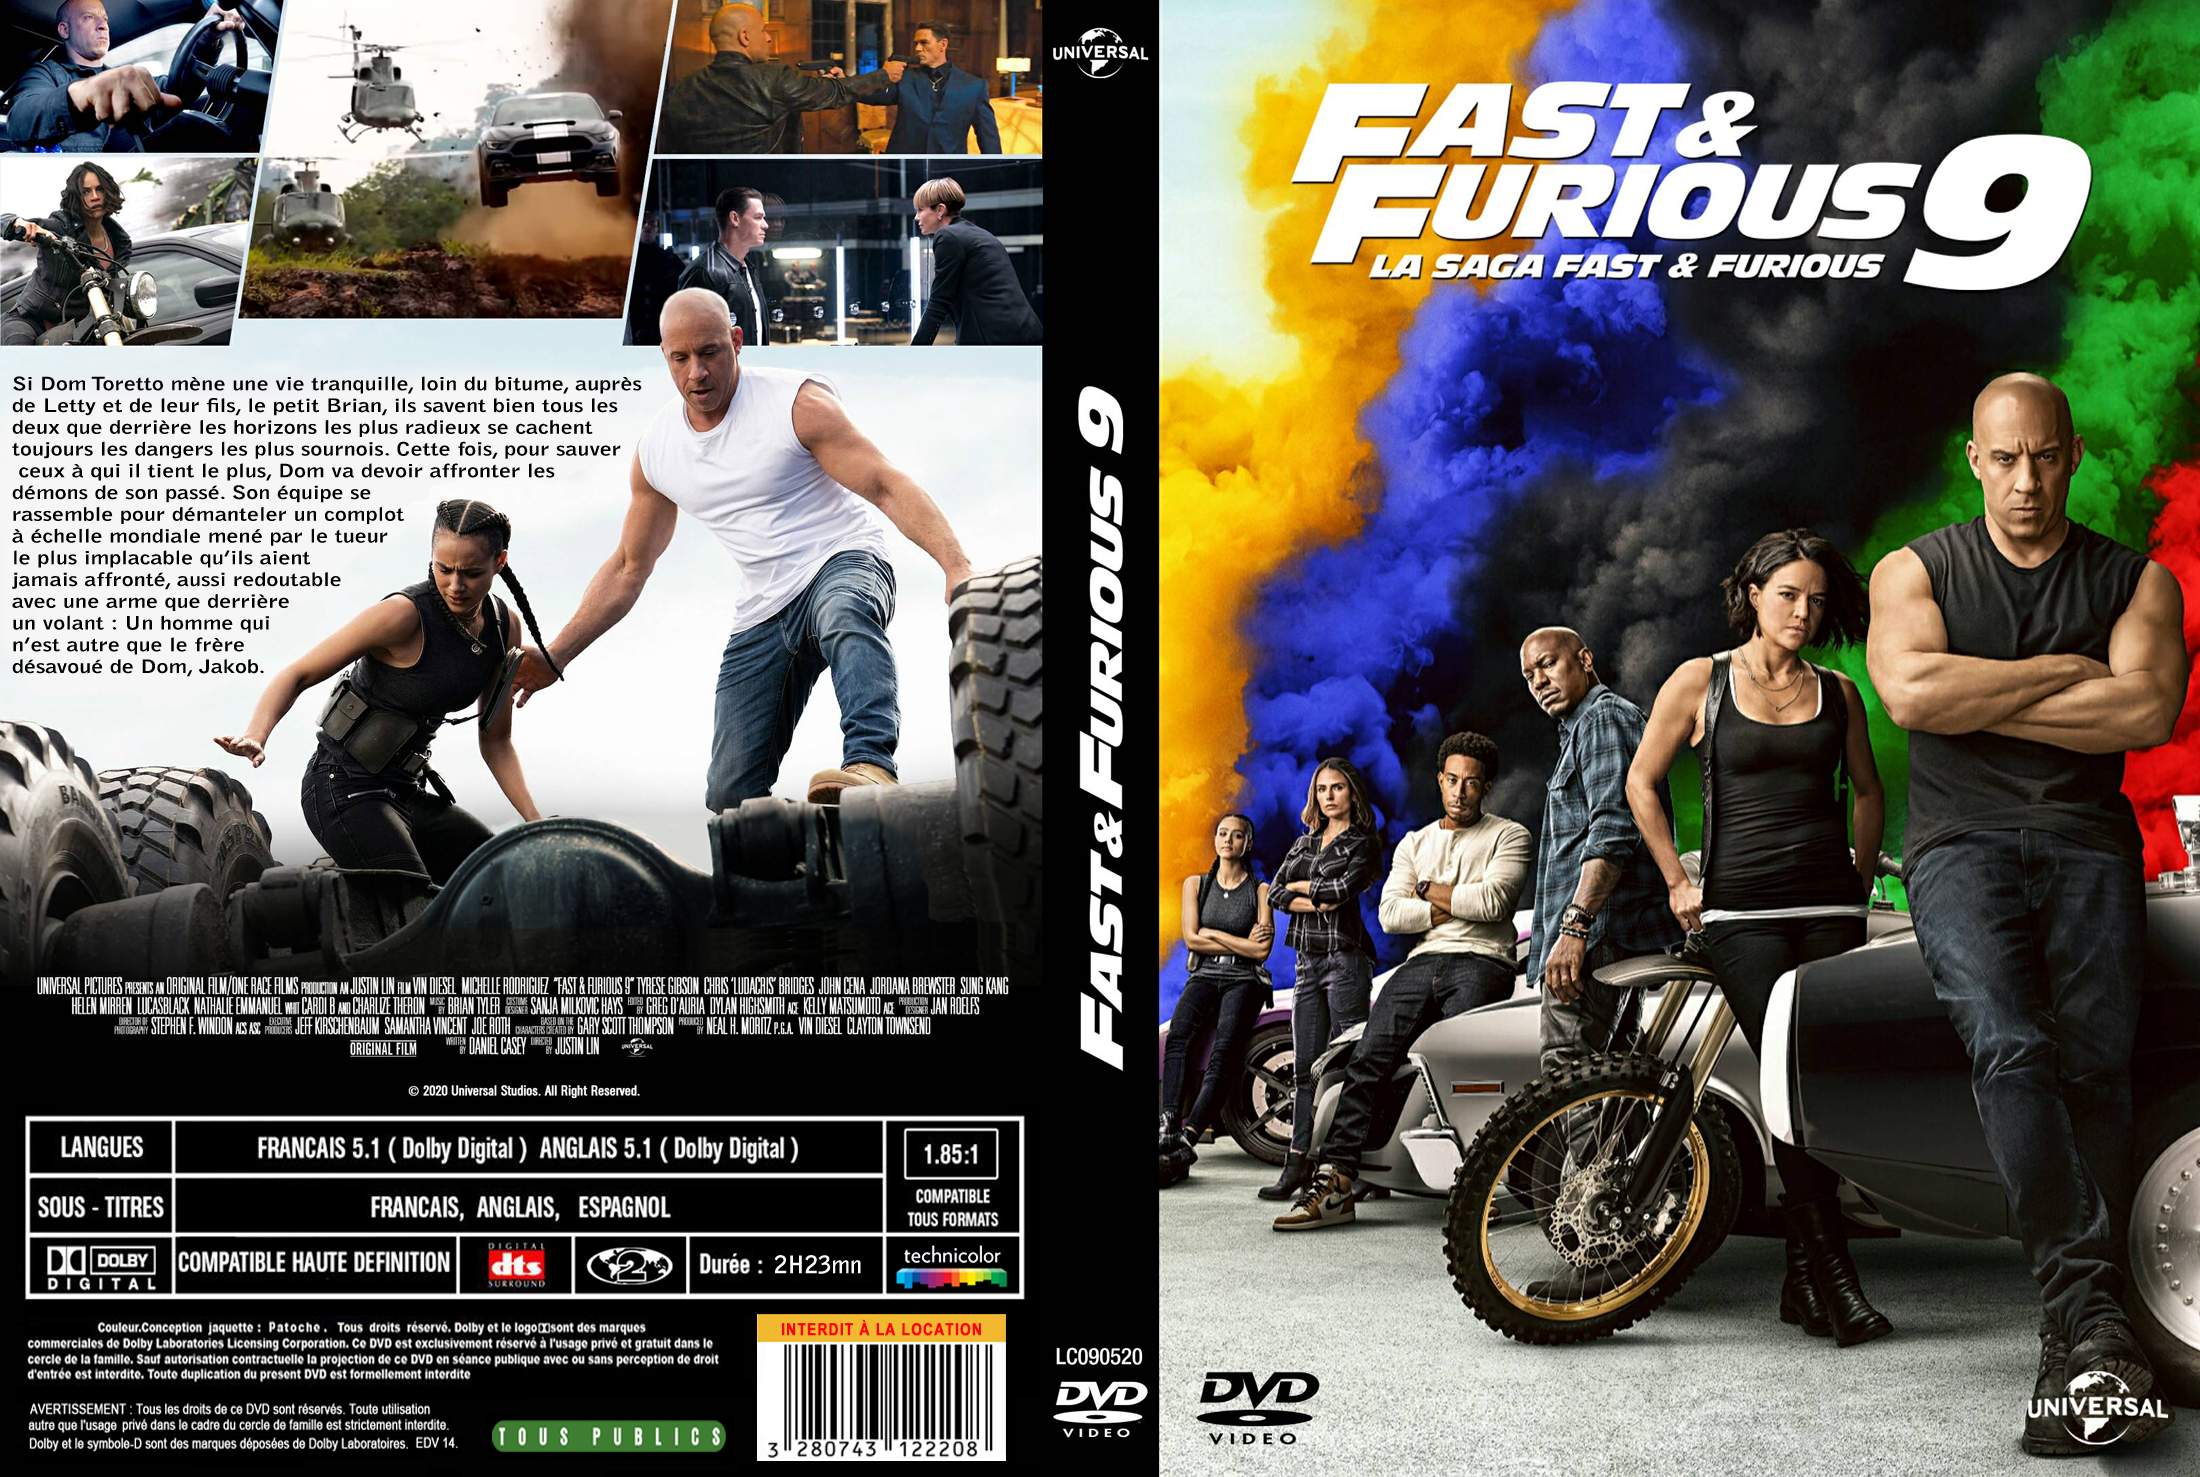 Jaquette DVD Fast & Furious 9 custom